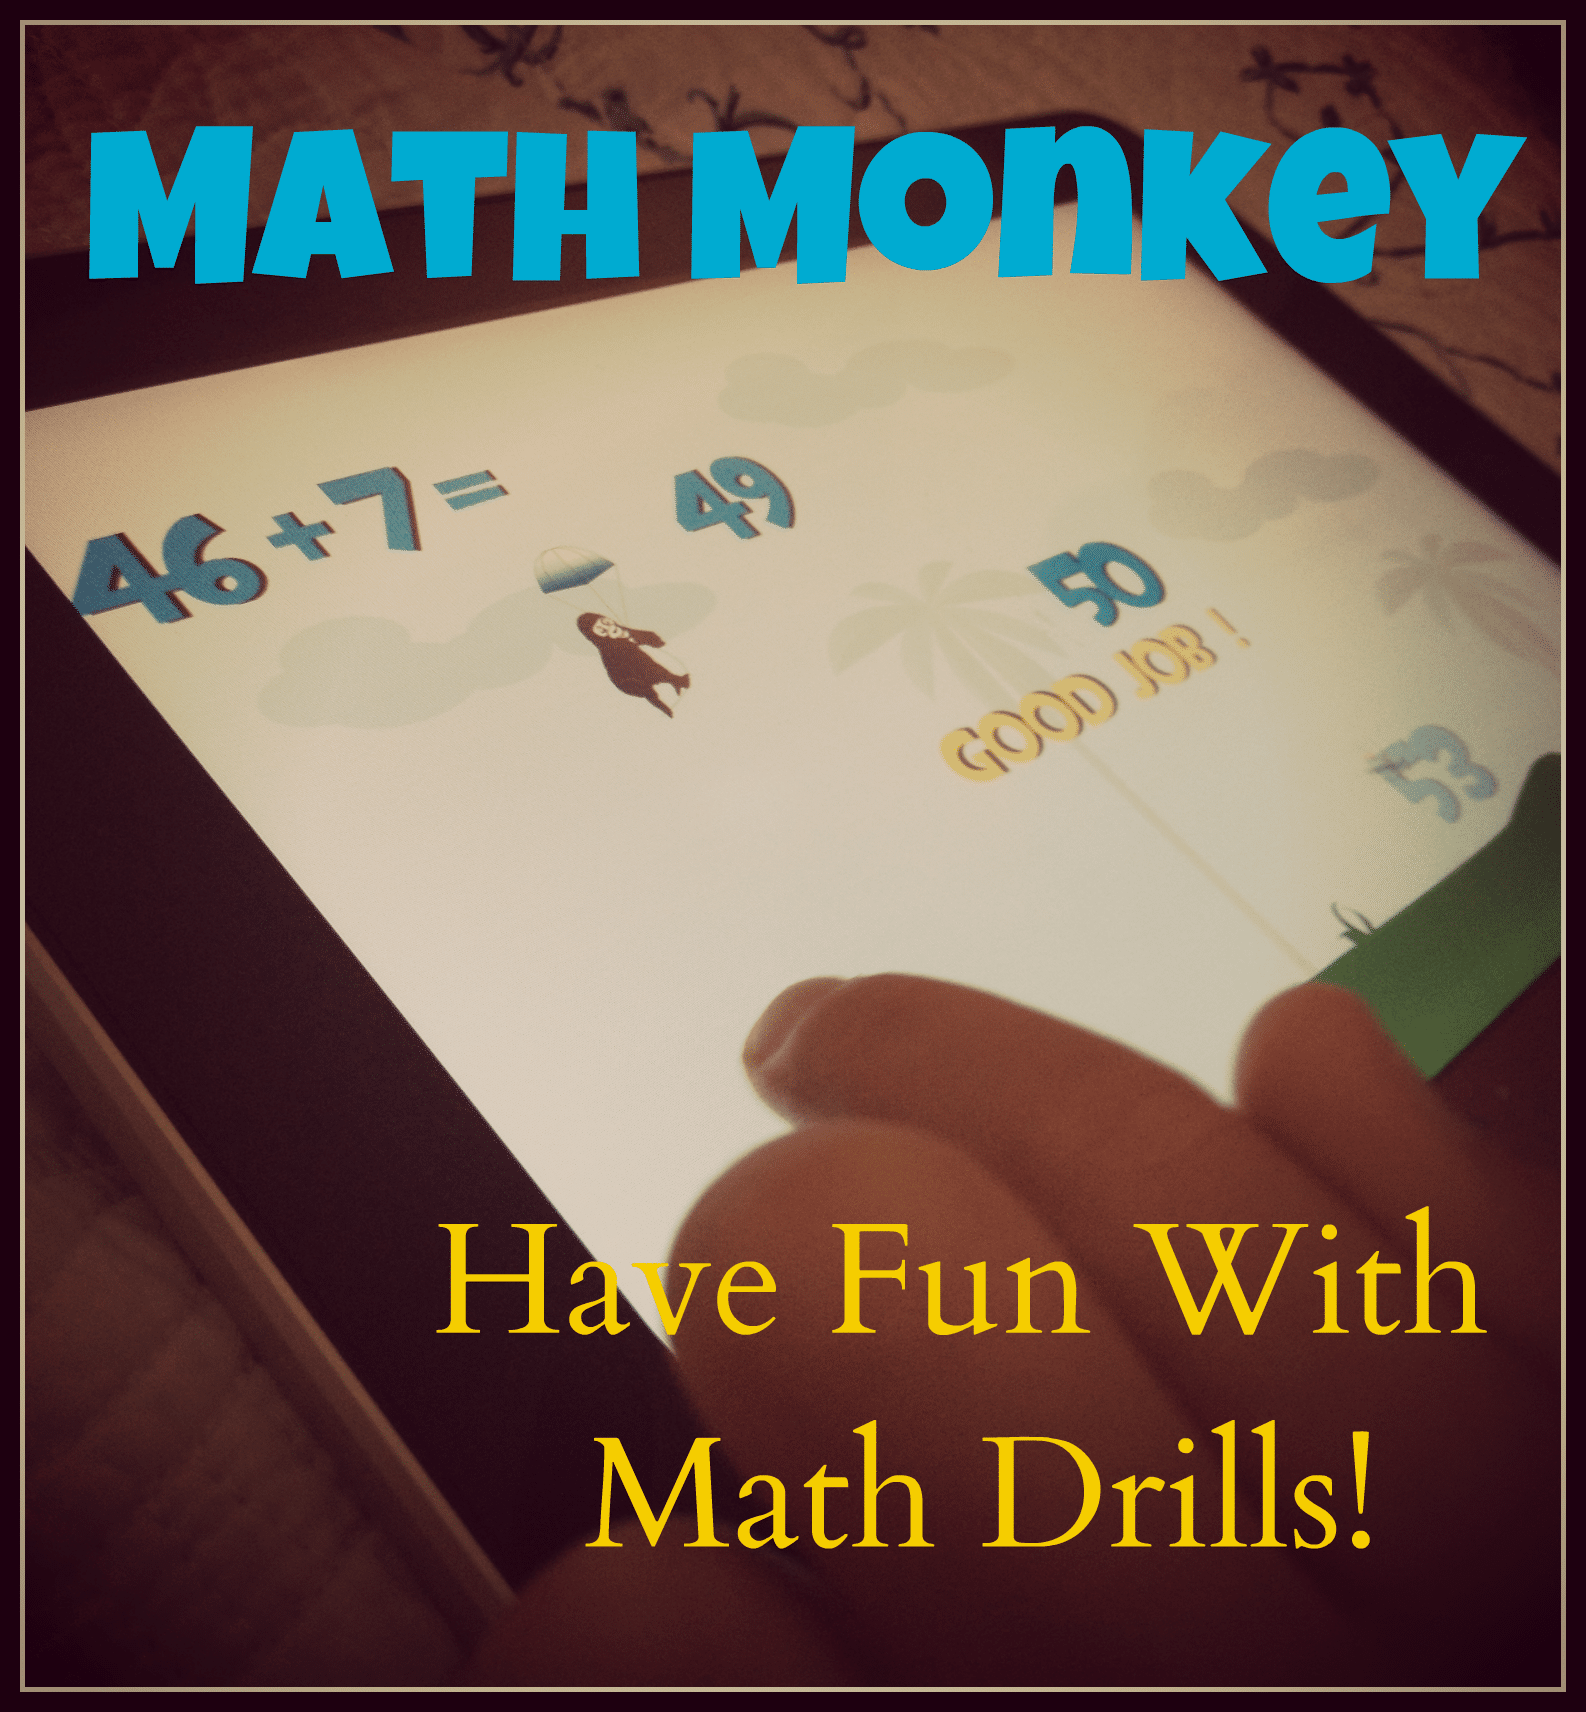 Make Math Drills Fun With Math Monkey